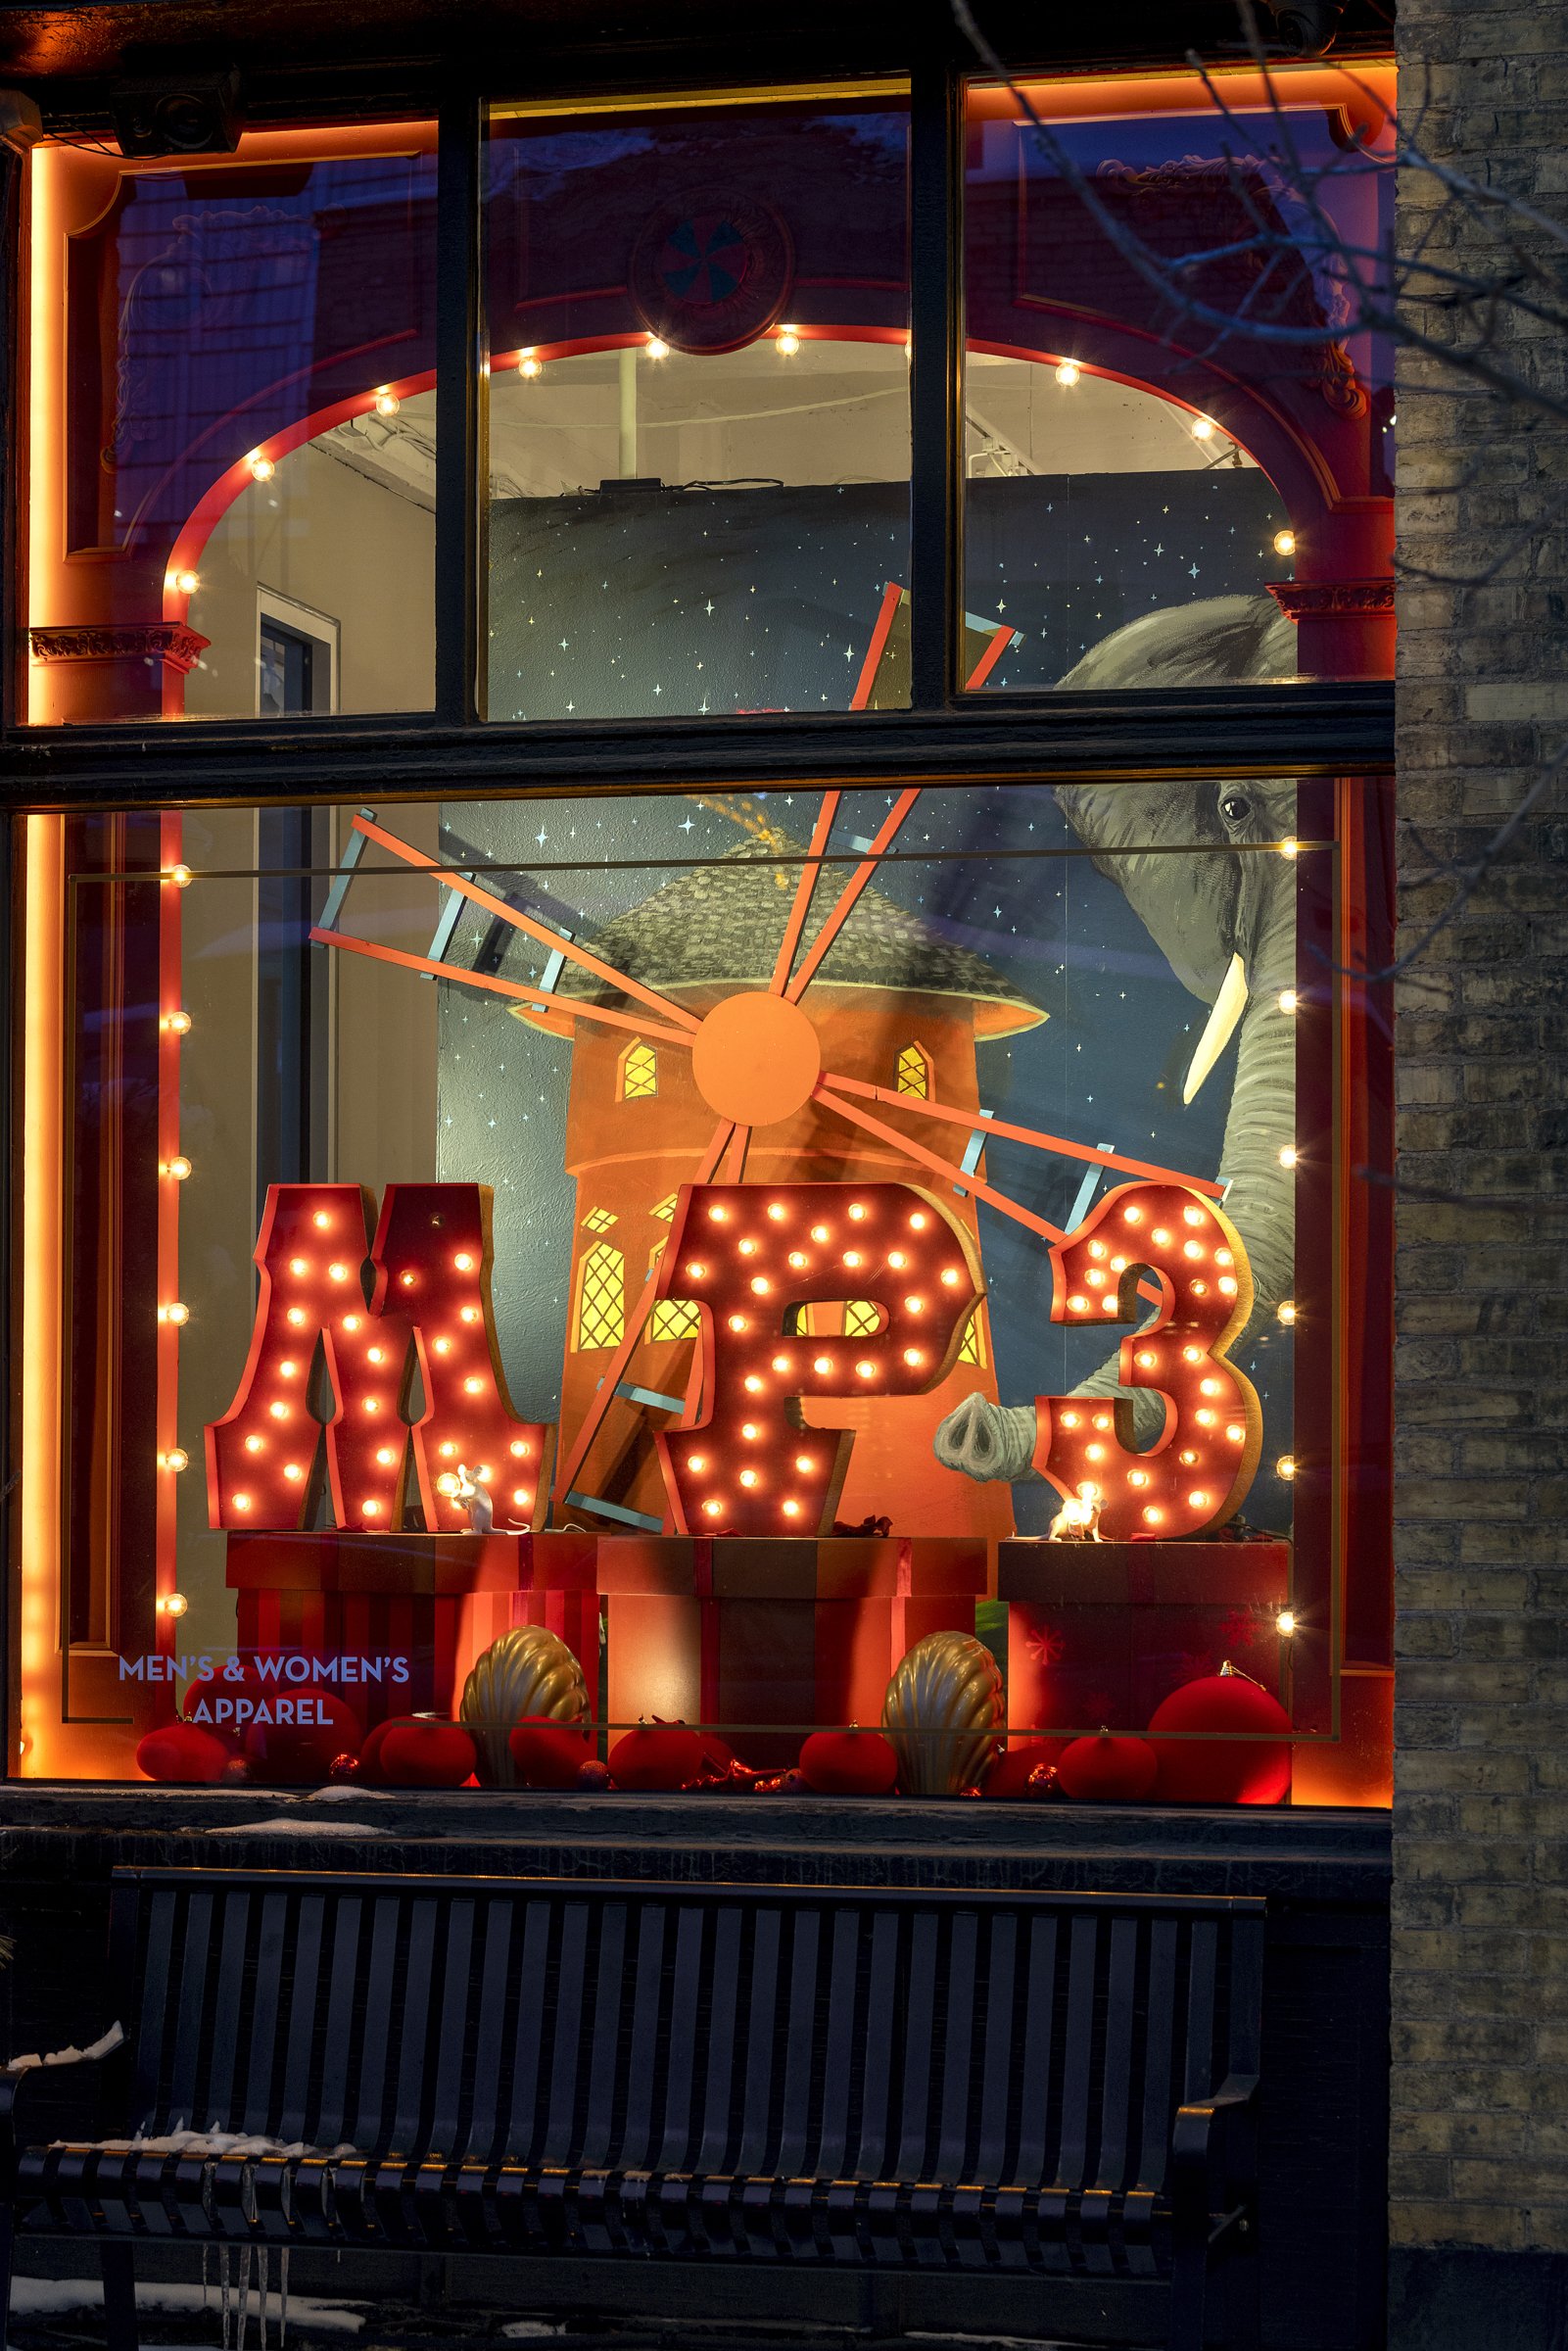 Martin Patrick 3_2022 Moulin Rouge Christmas Window Displays_212 N 3rd Ave #106_002.jpg